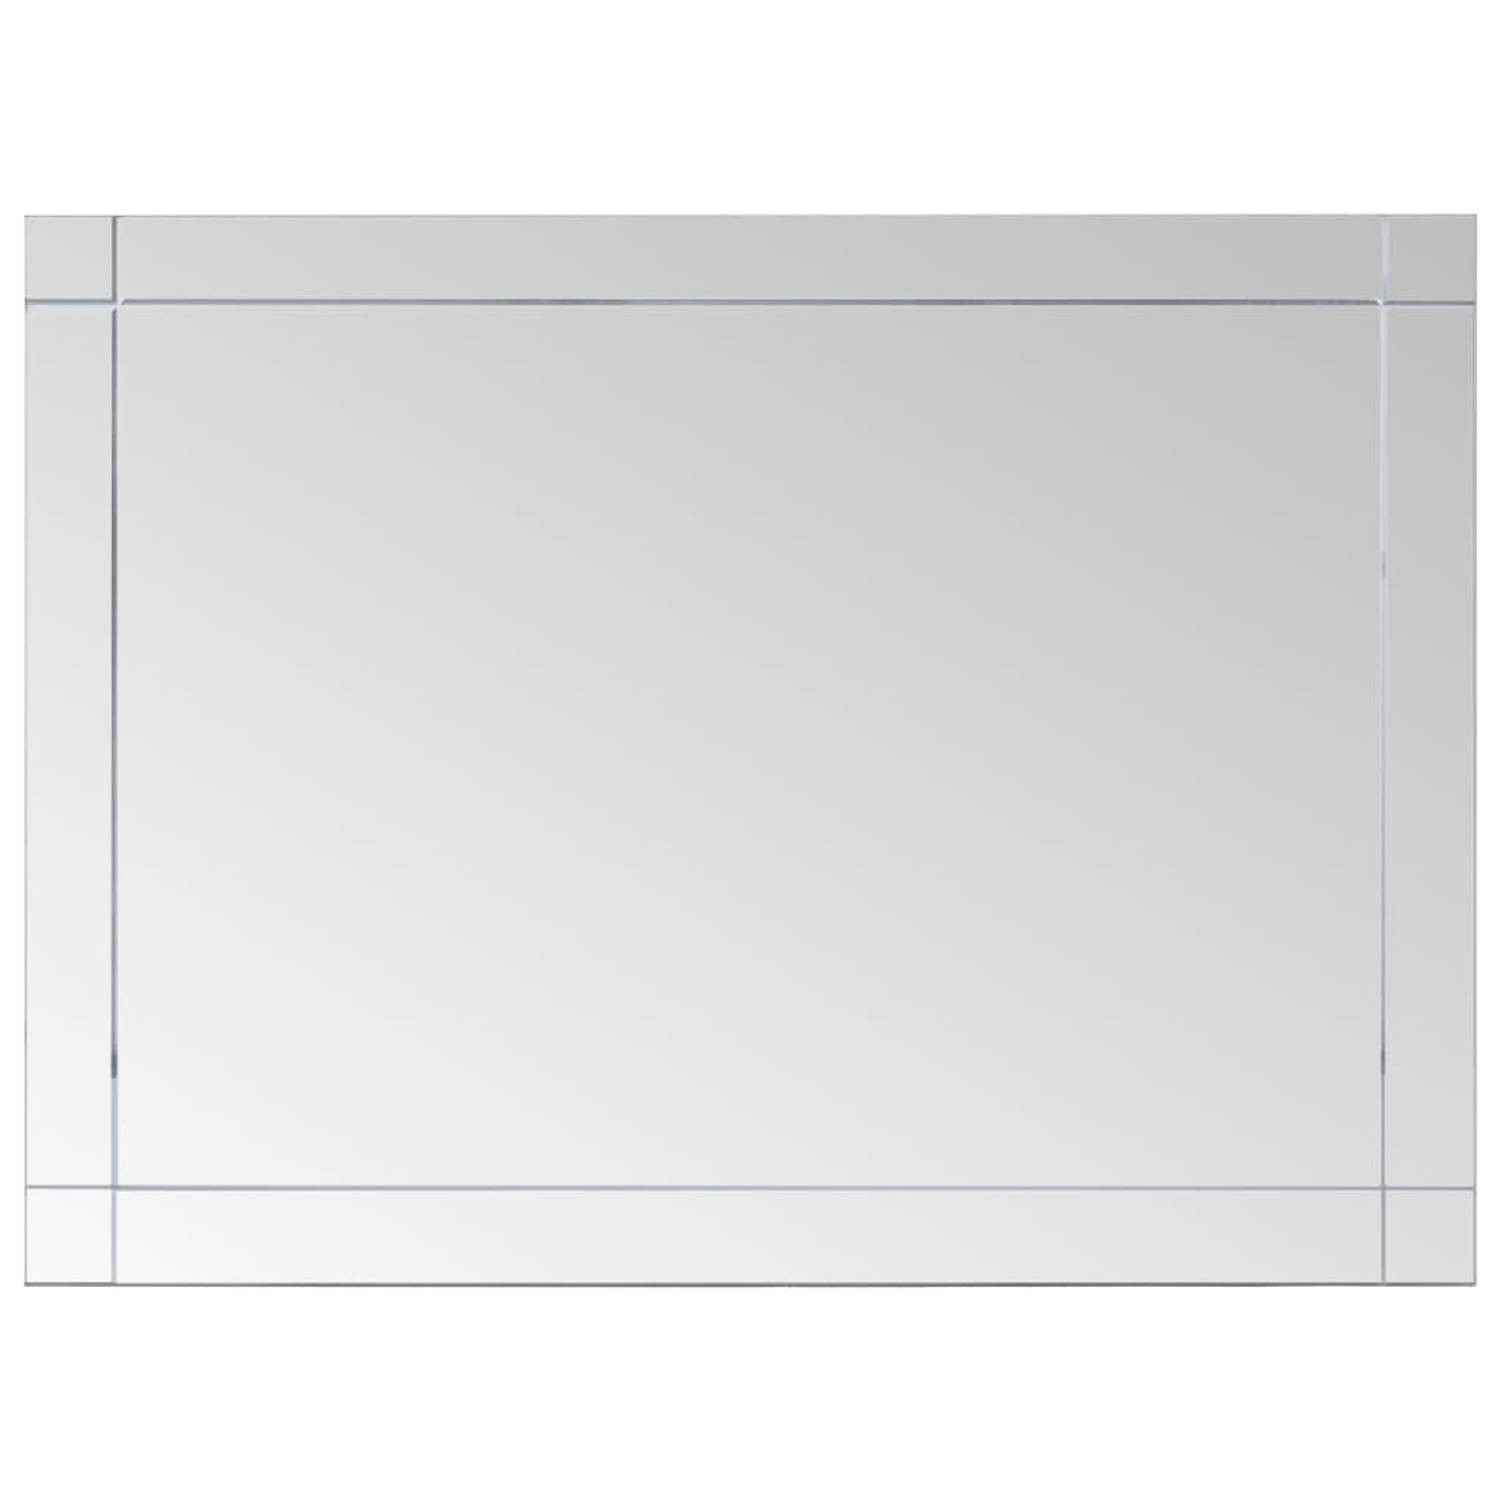 The Living Store Muurspiegel - Glas - 60 x 40 cm - Veilige rand - Strakke uitstraling